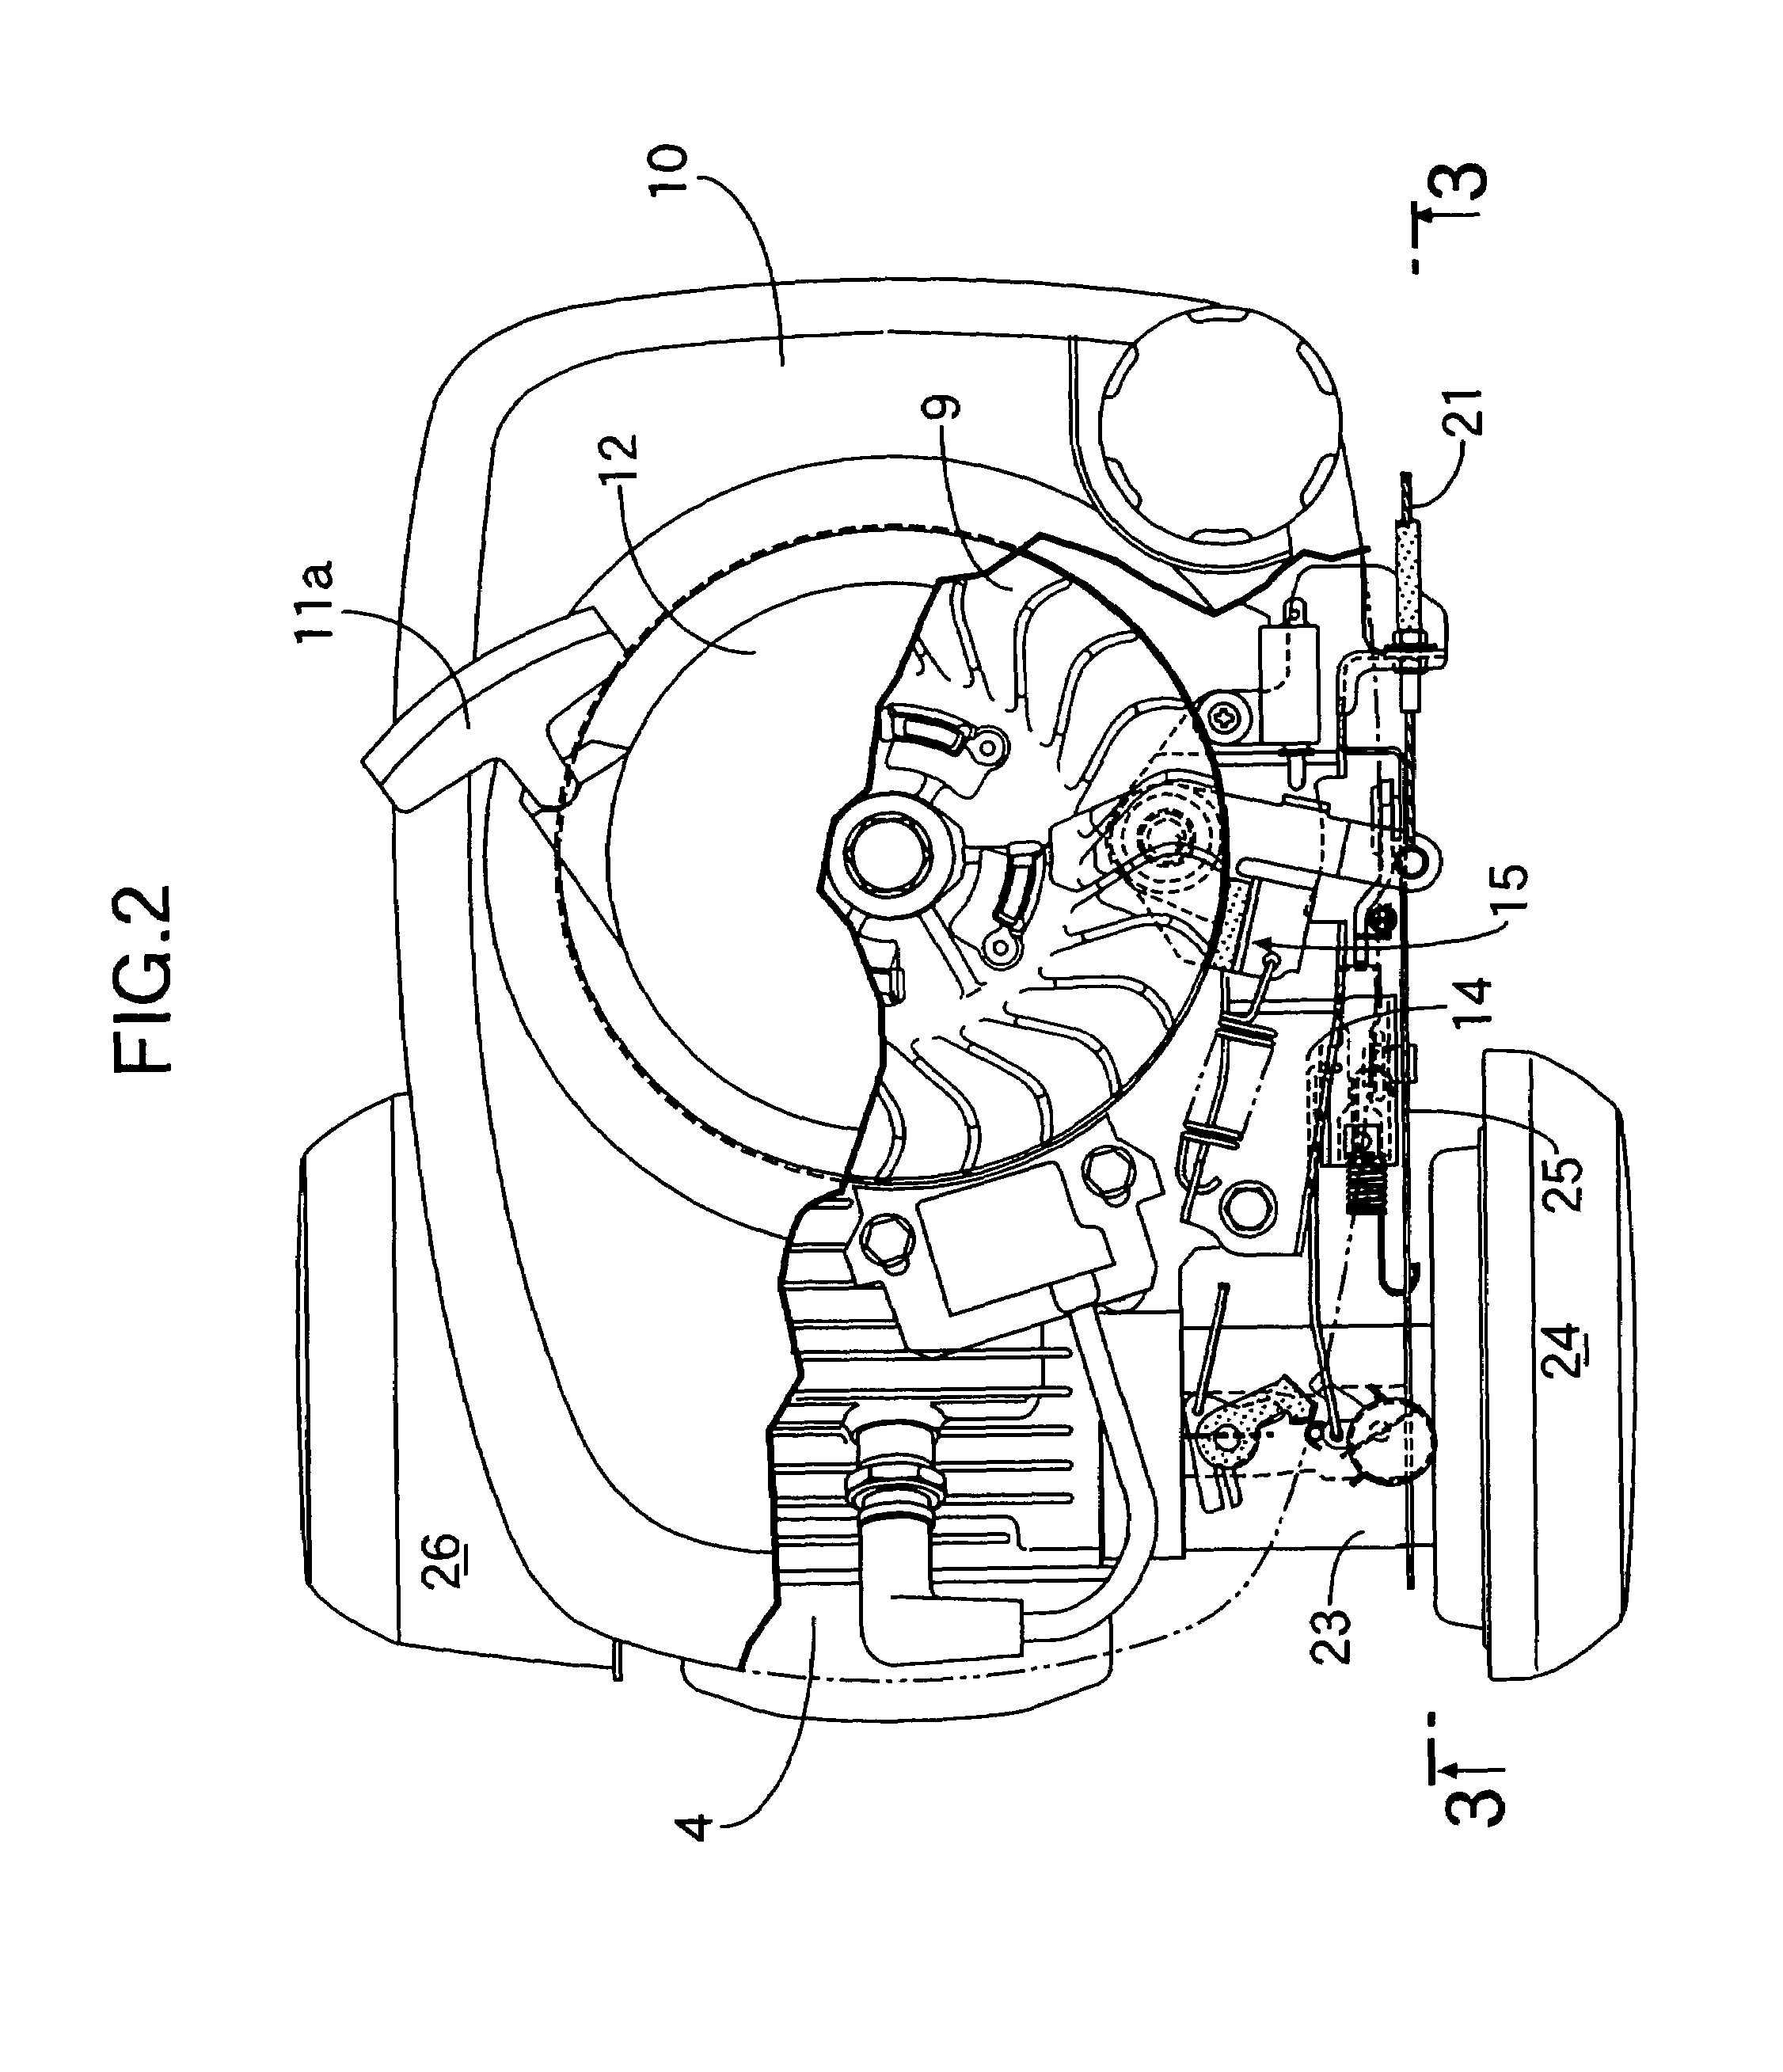 Device for controlling choke valve of carburetor